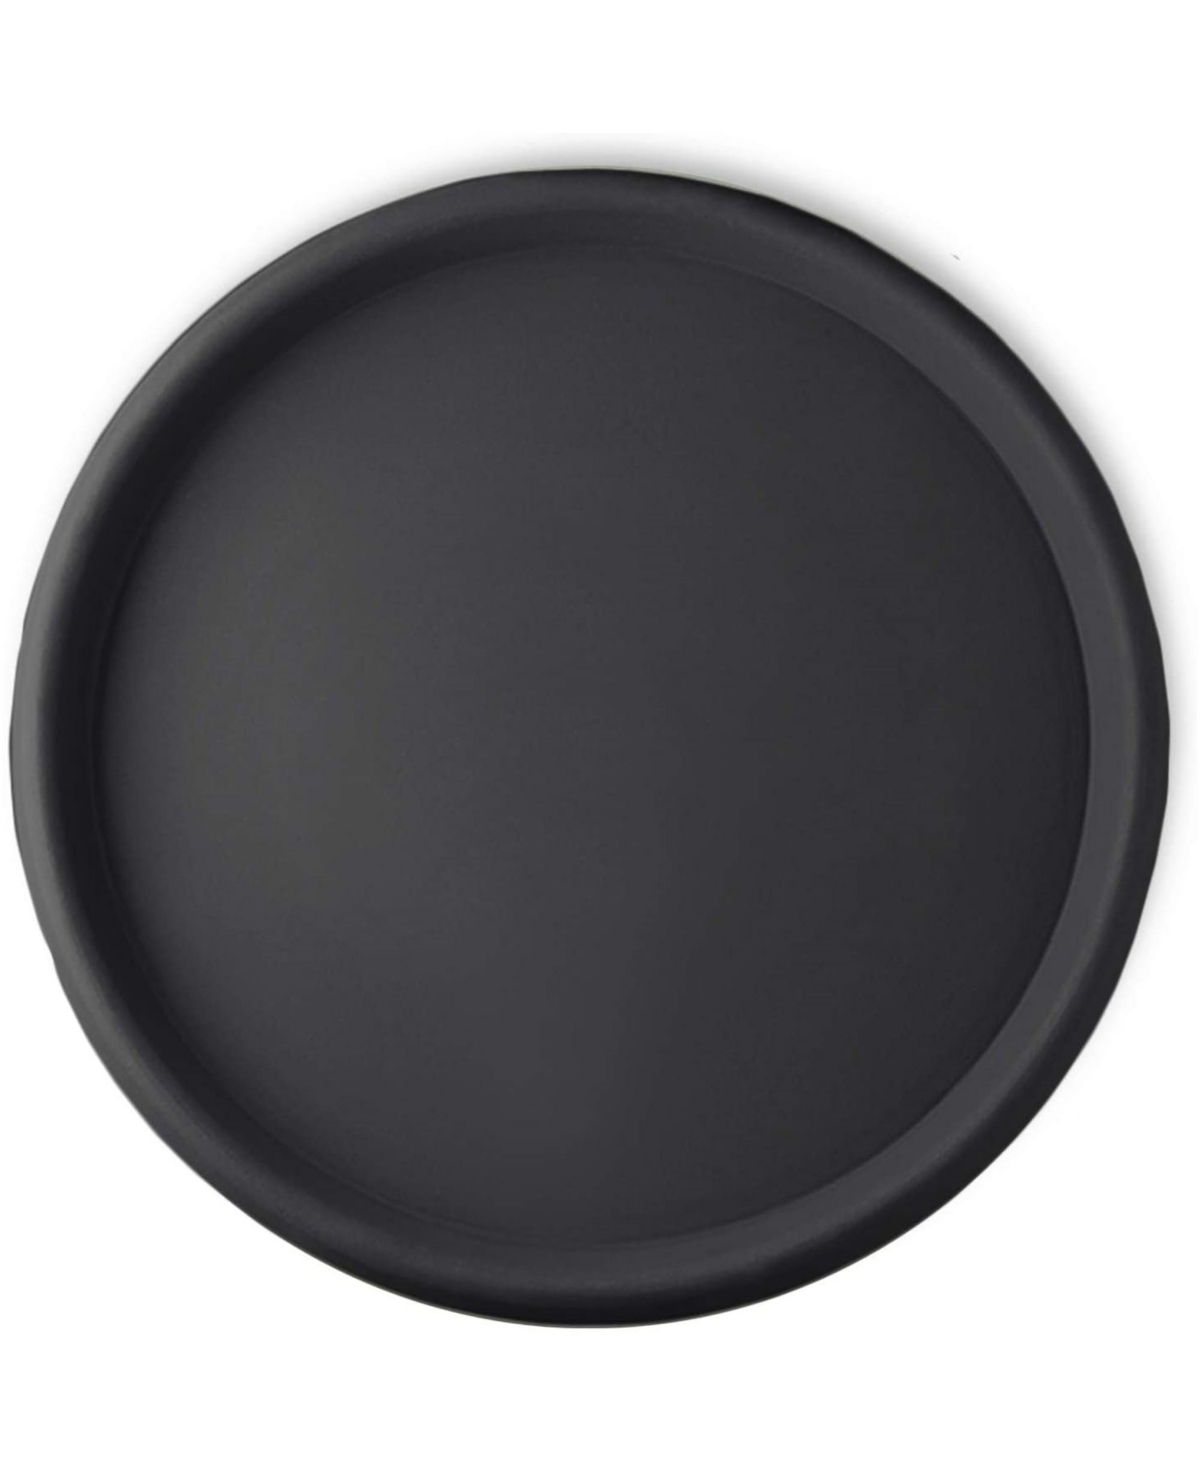 Universal Saucer, Round, Caviar Black, 25.5in - Black